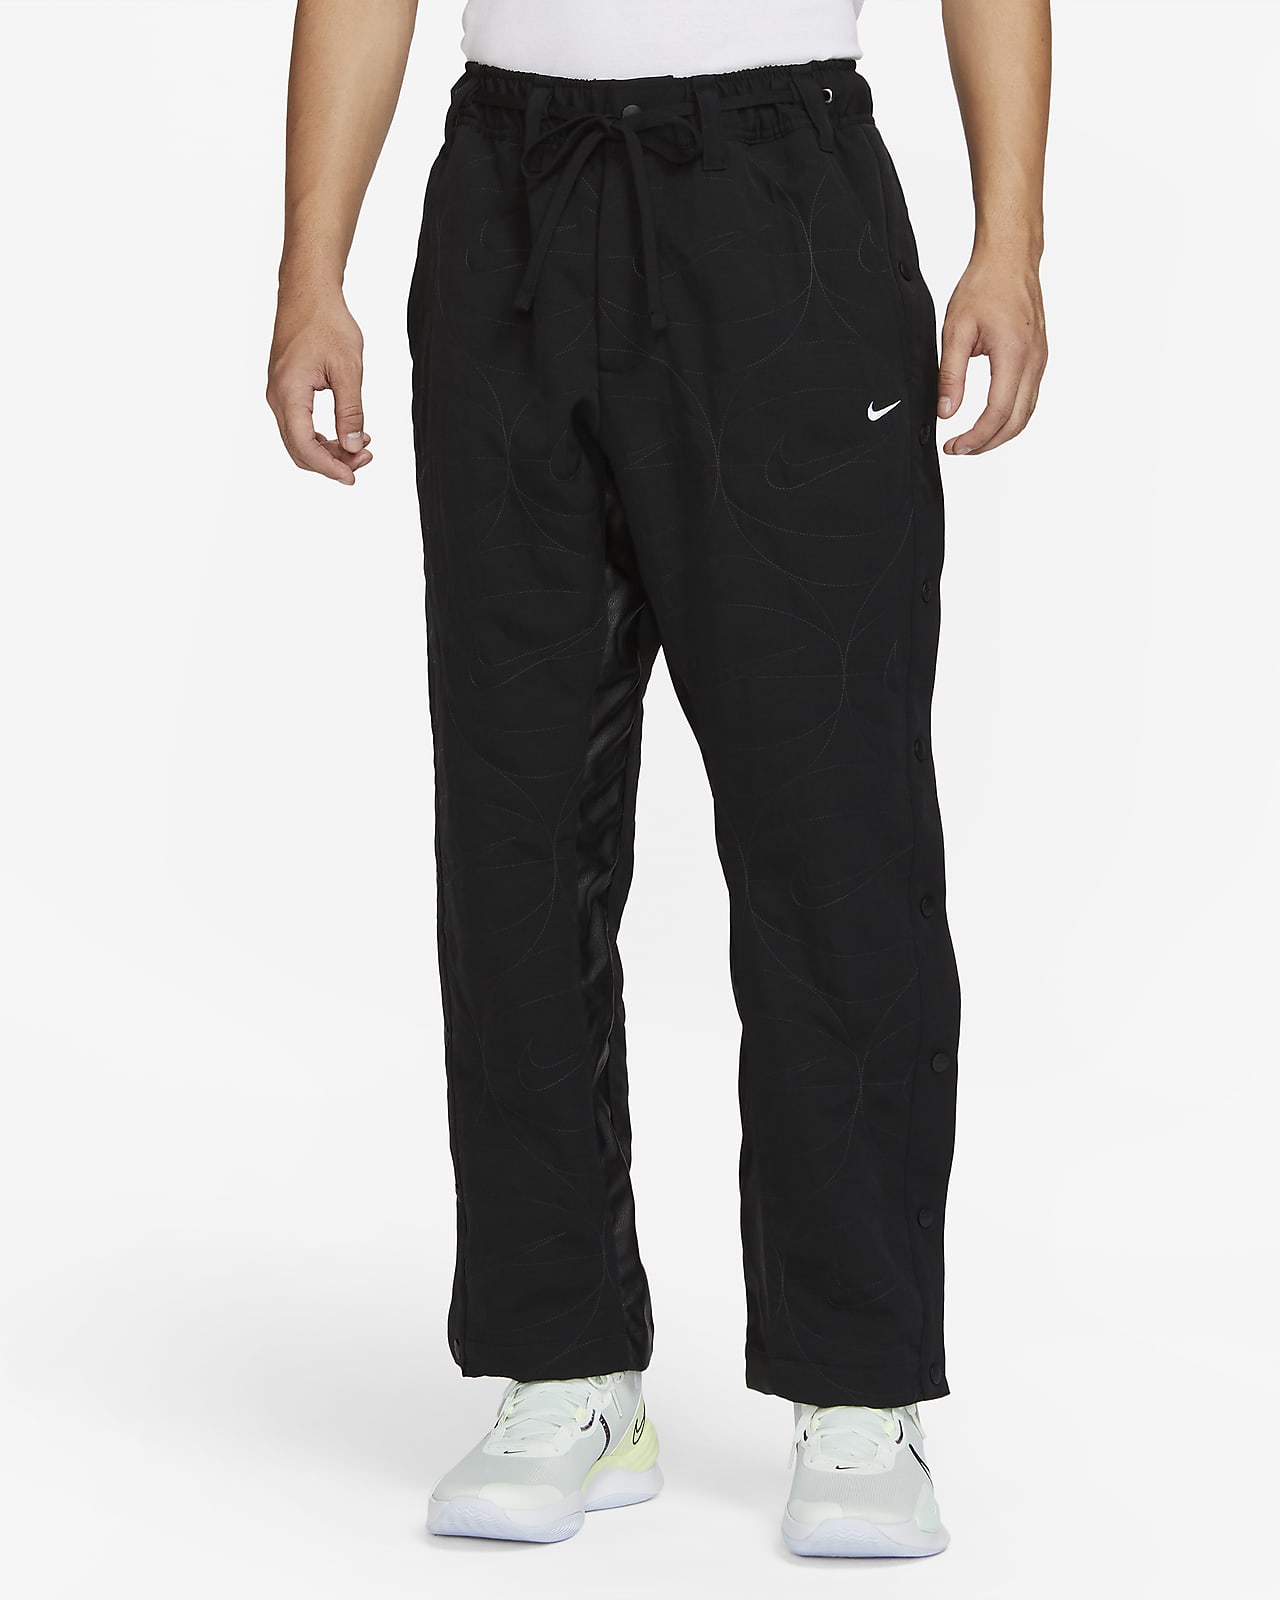 Nike Men's Woven Tearaway Basketball Trousers